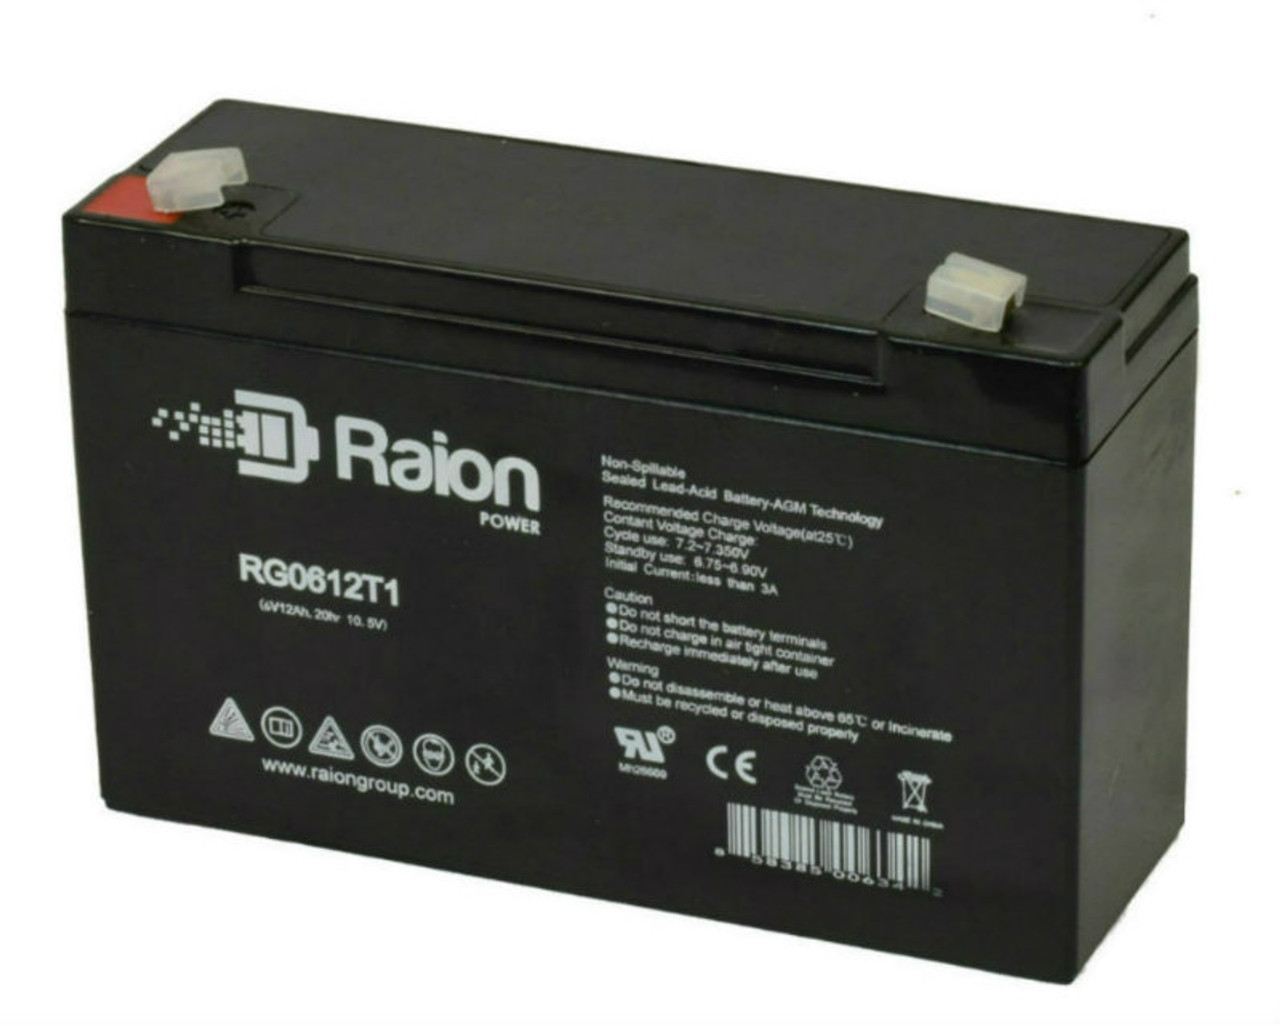 Raion Power RG06120T1 Replacement 6V 12Ah Emergency Light Battery for Sonnenschein 1000